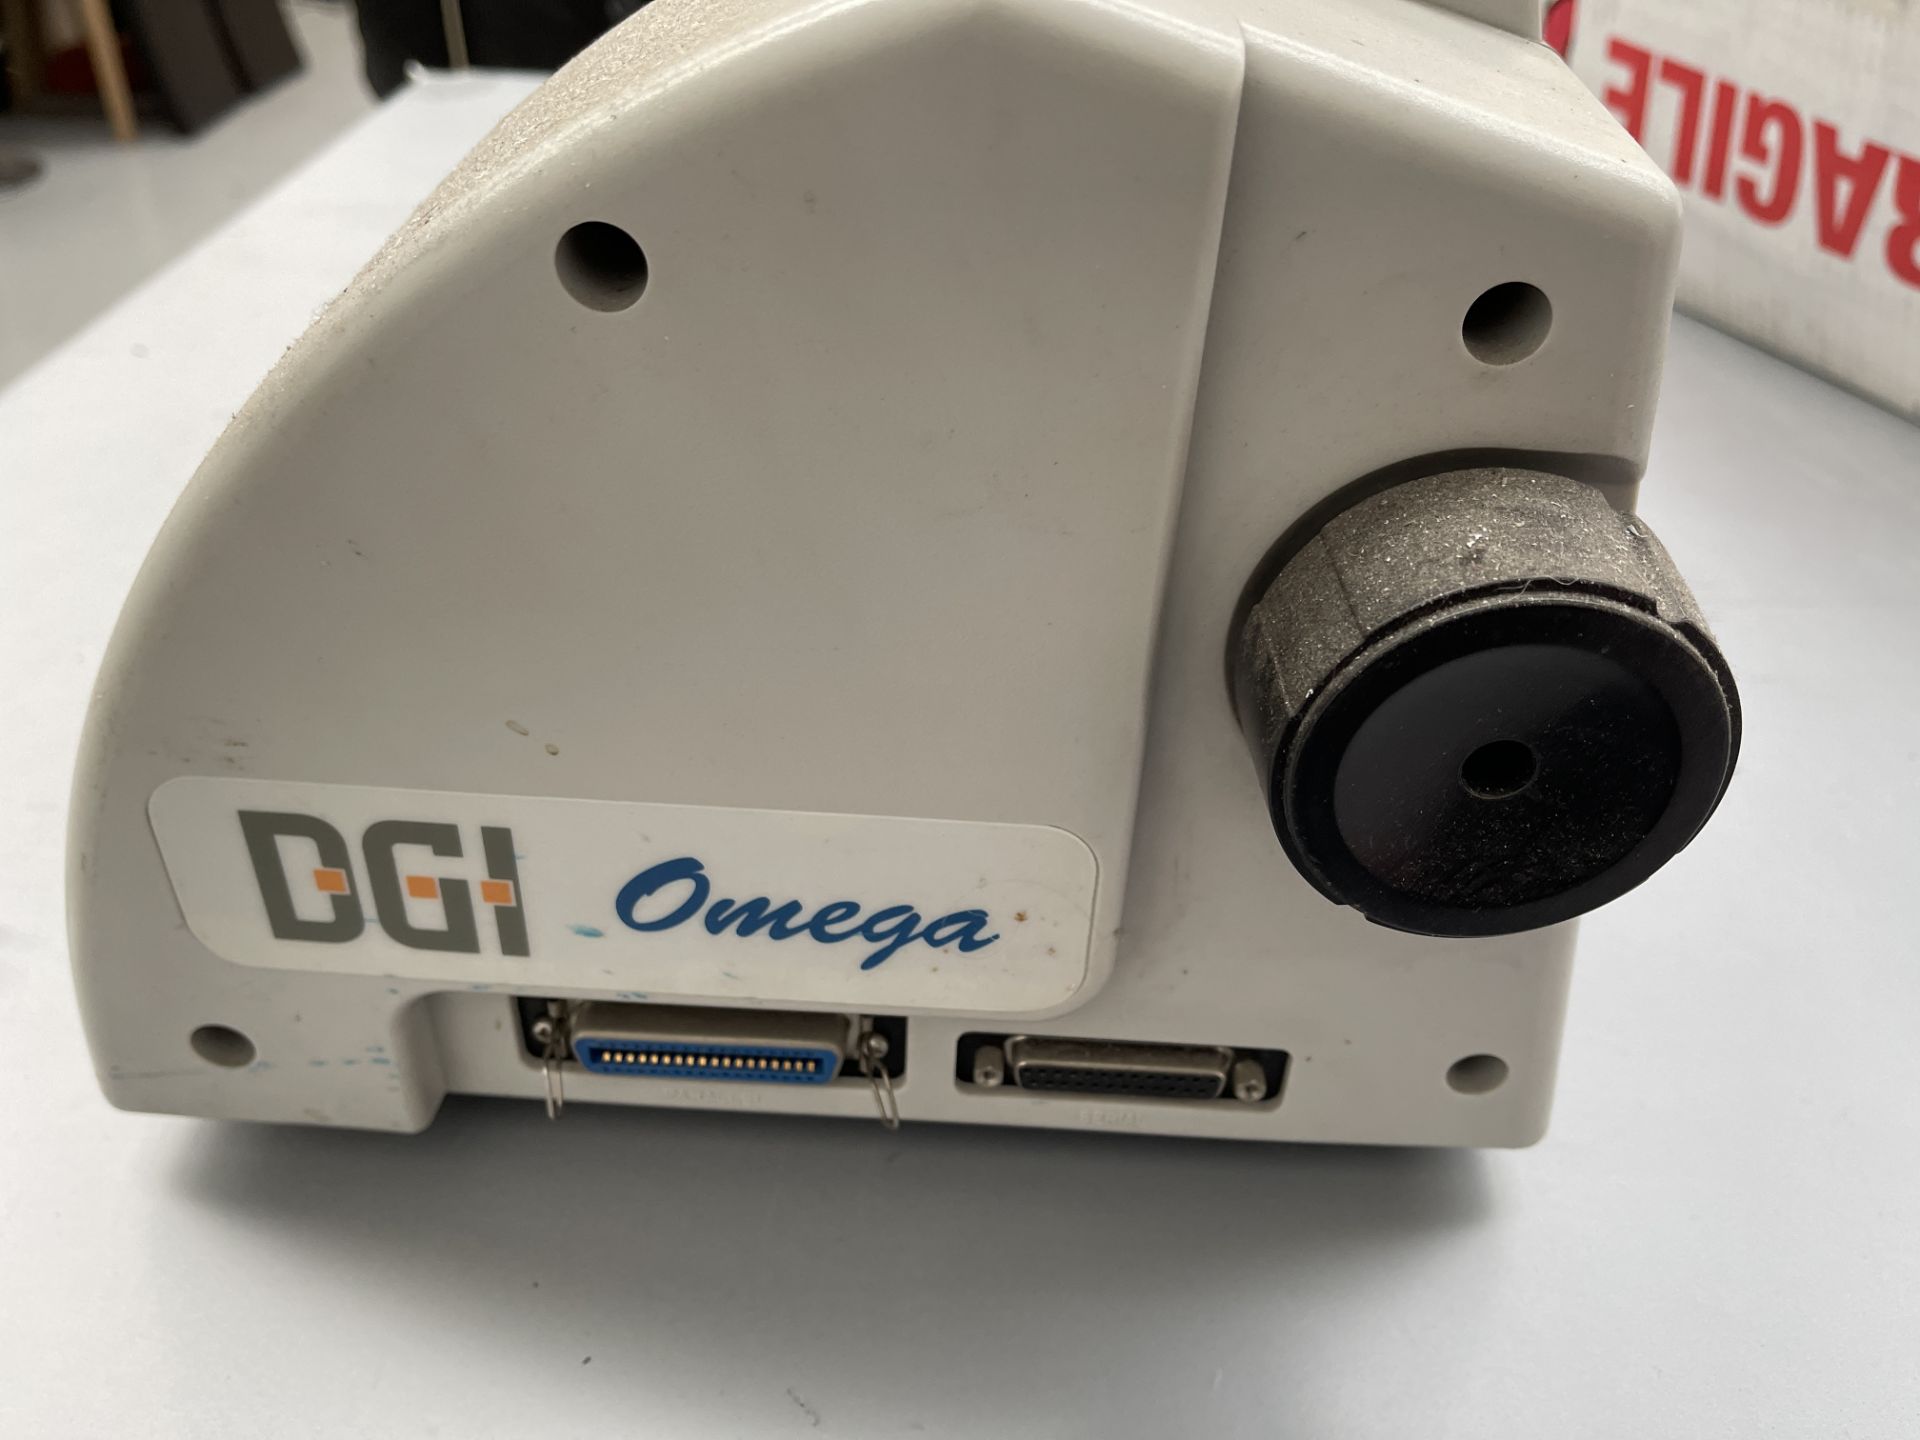 DGI Omega - OM-40 - Cutting Plotter - Image 3 of 4